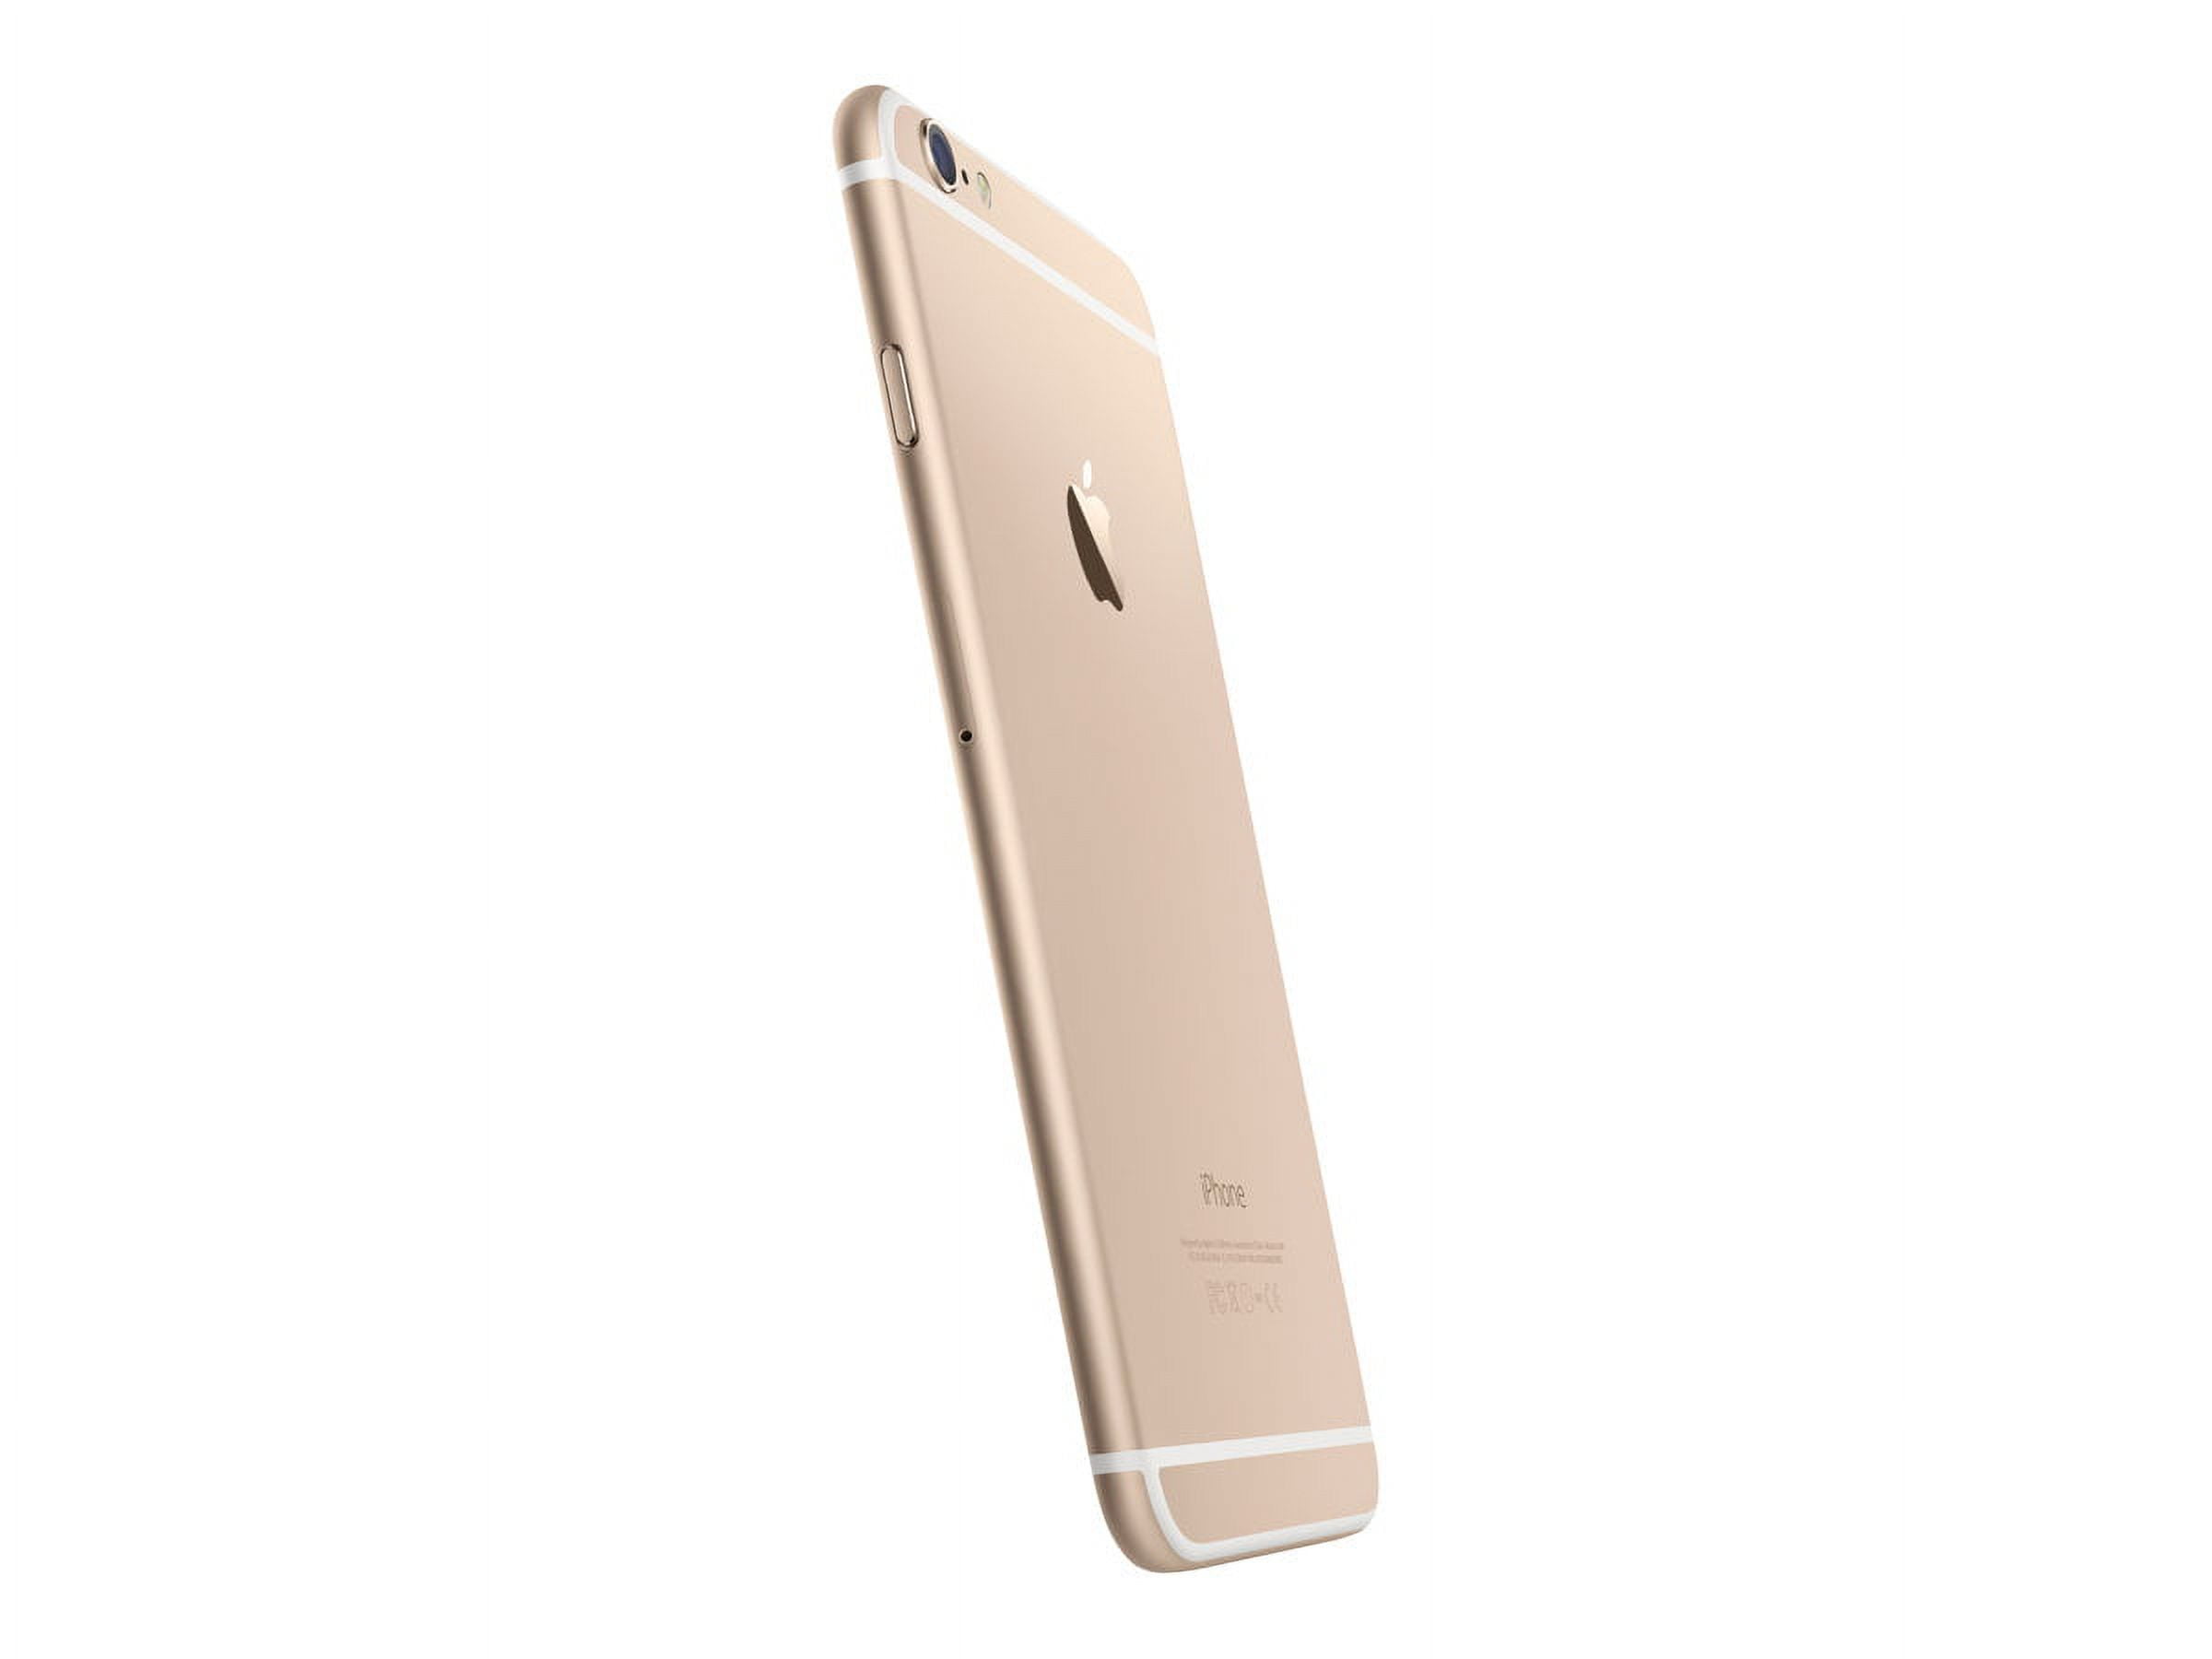 Apple iPhone 6+ (16GB) Gold - Verizon